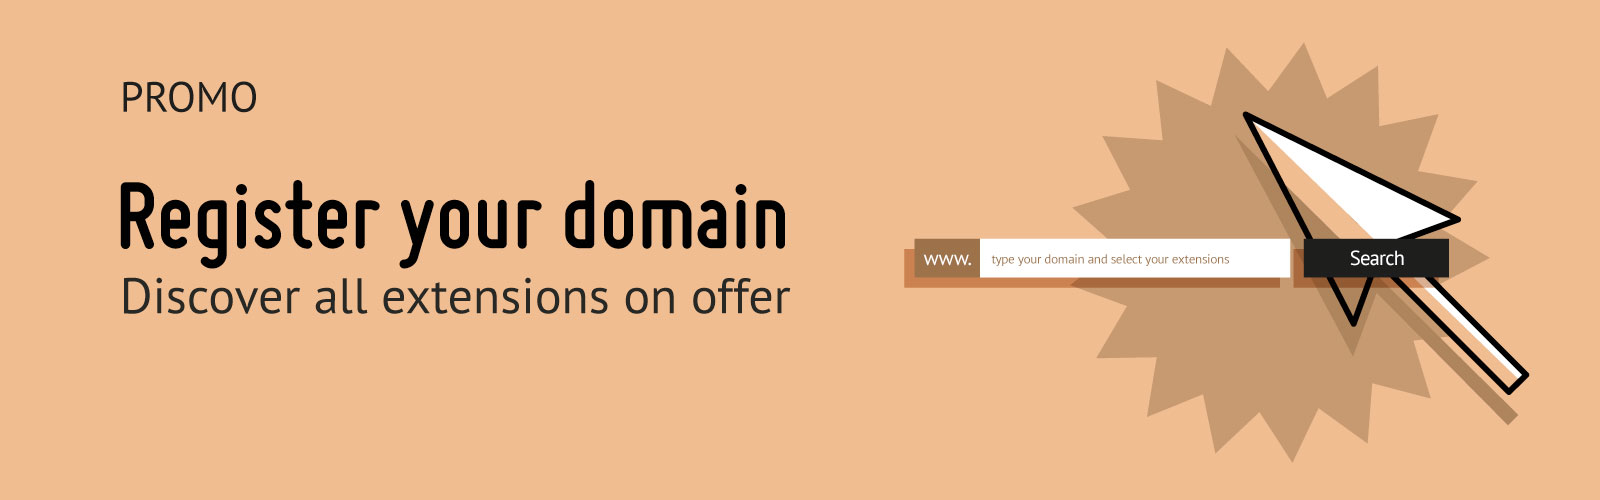 Domains Registration PROMO